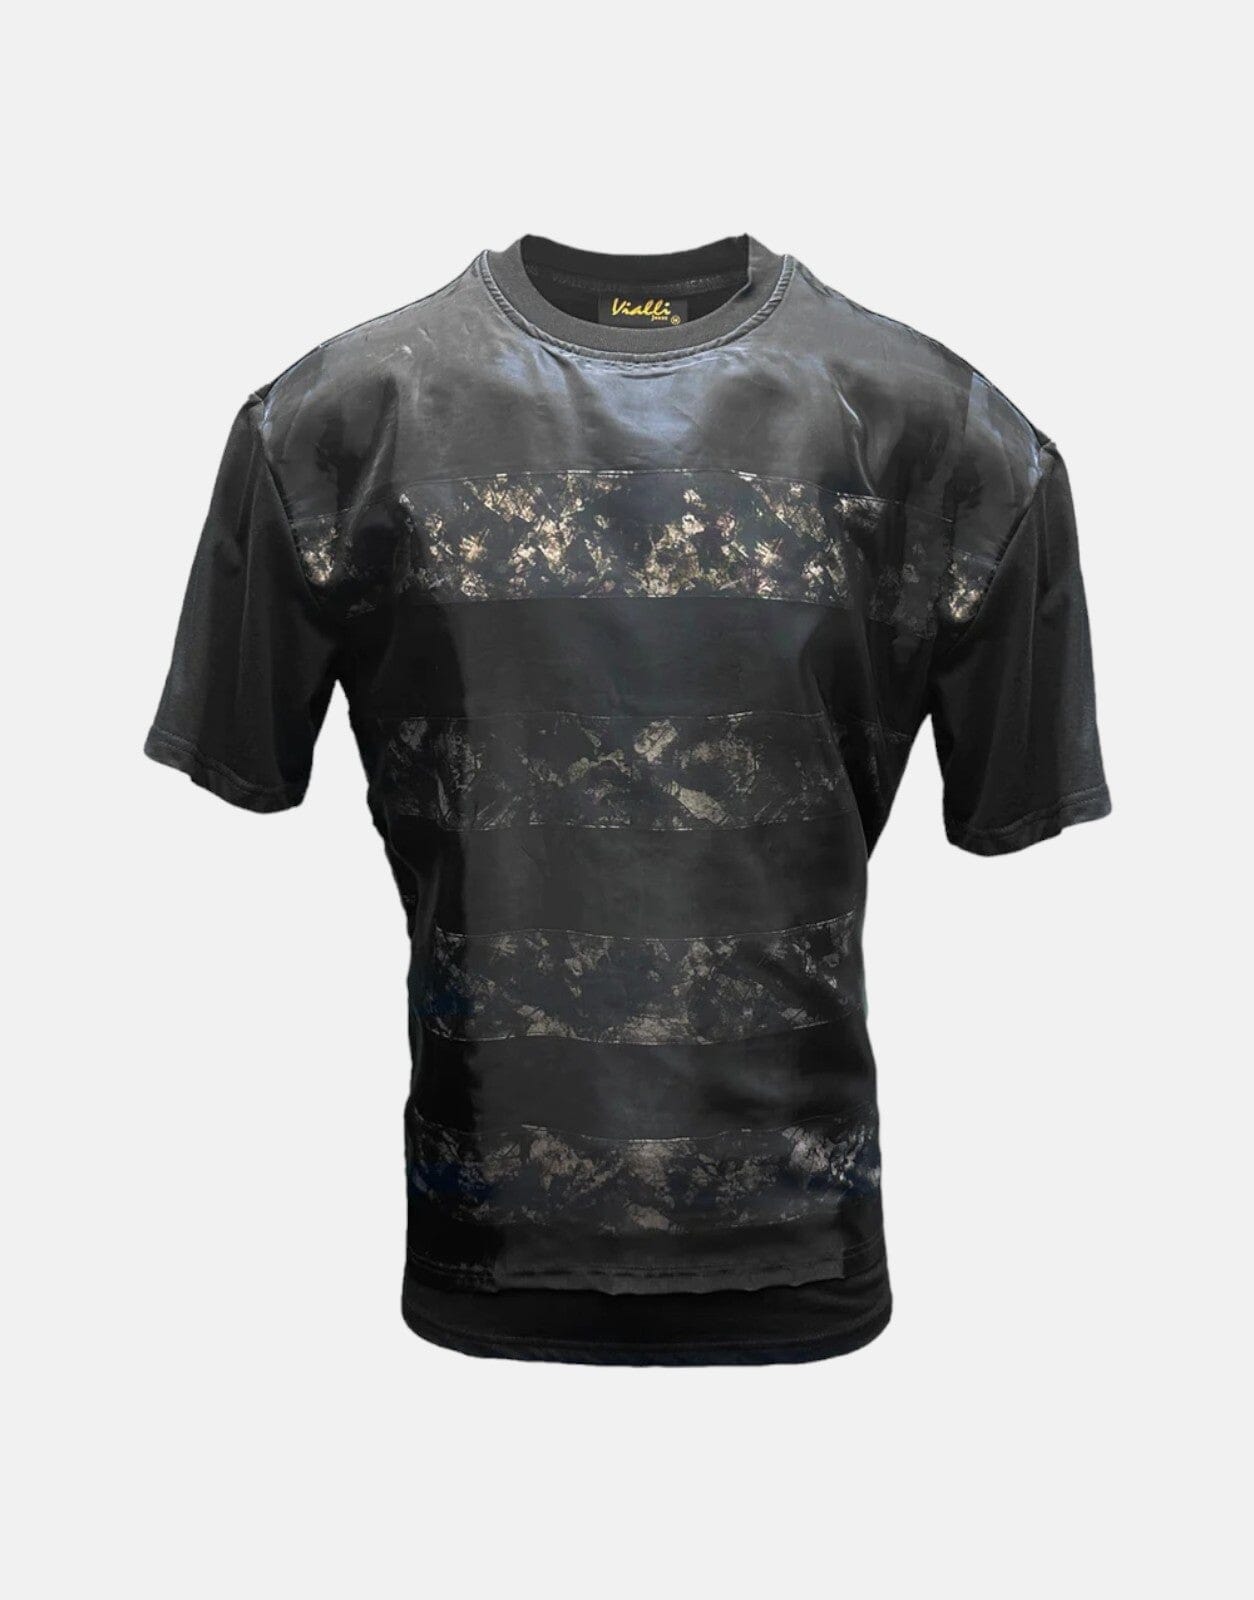 Vialli Fraction Black T-Shirt - Subwear